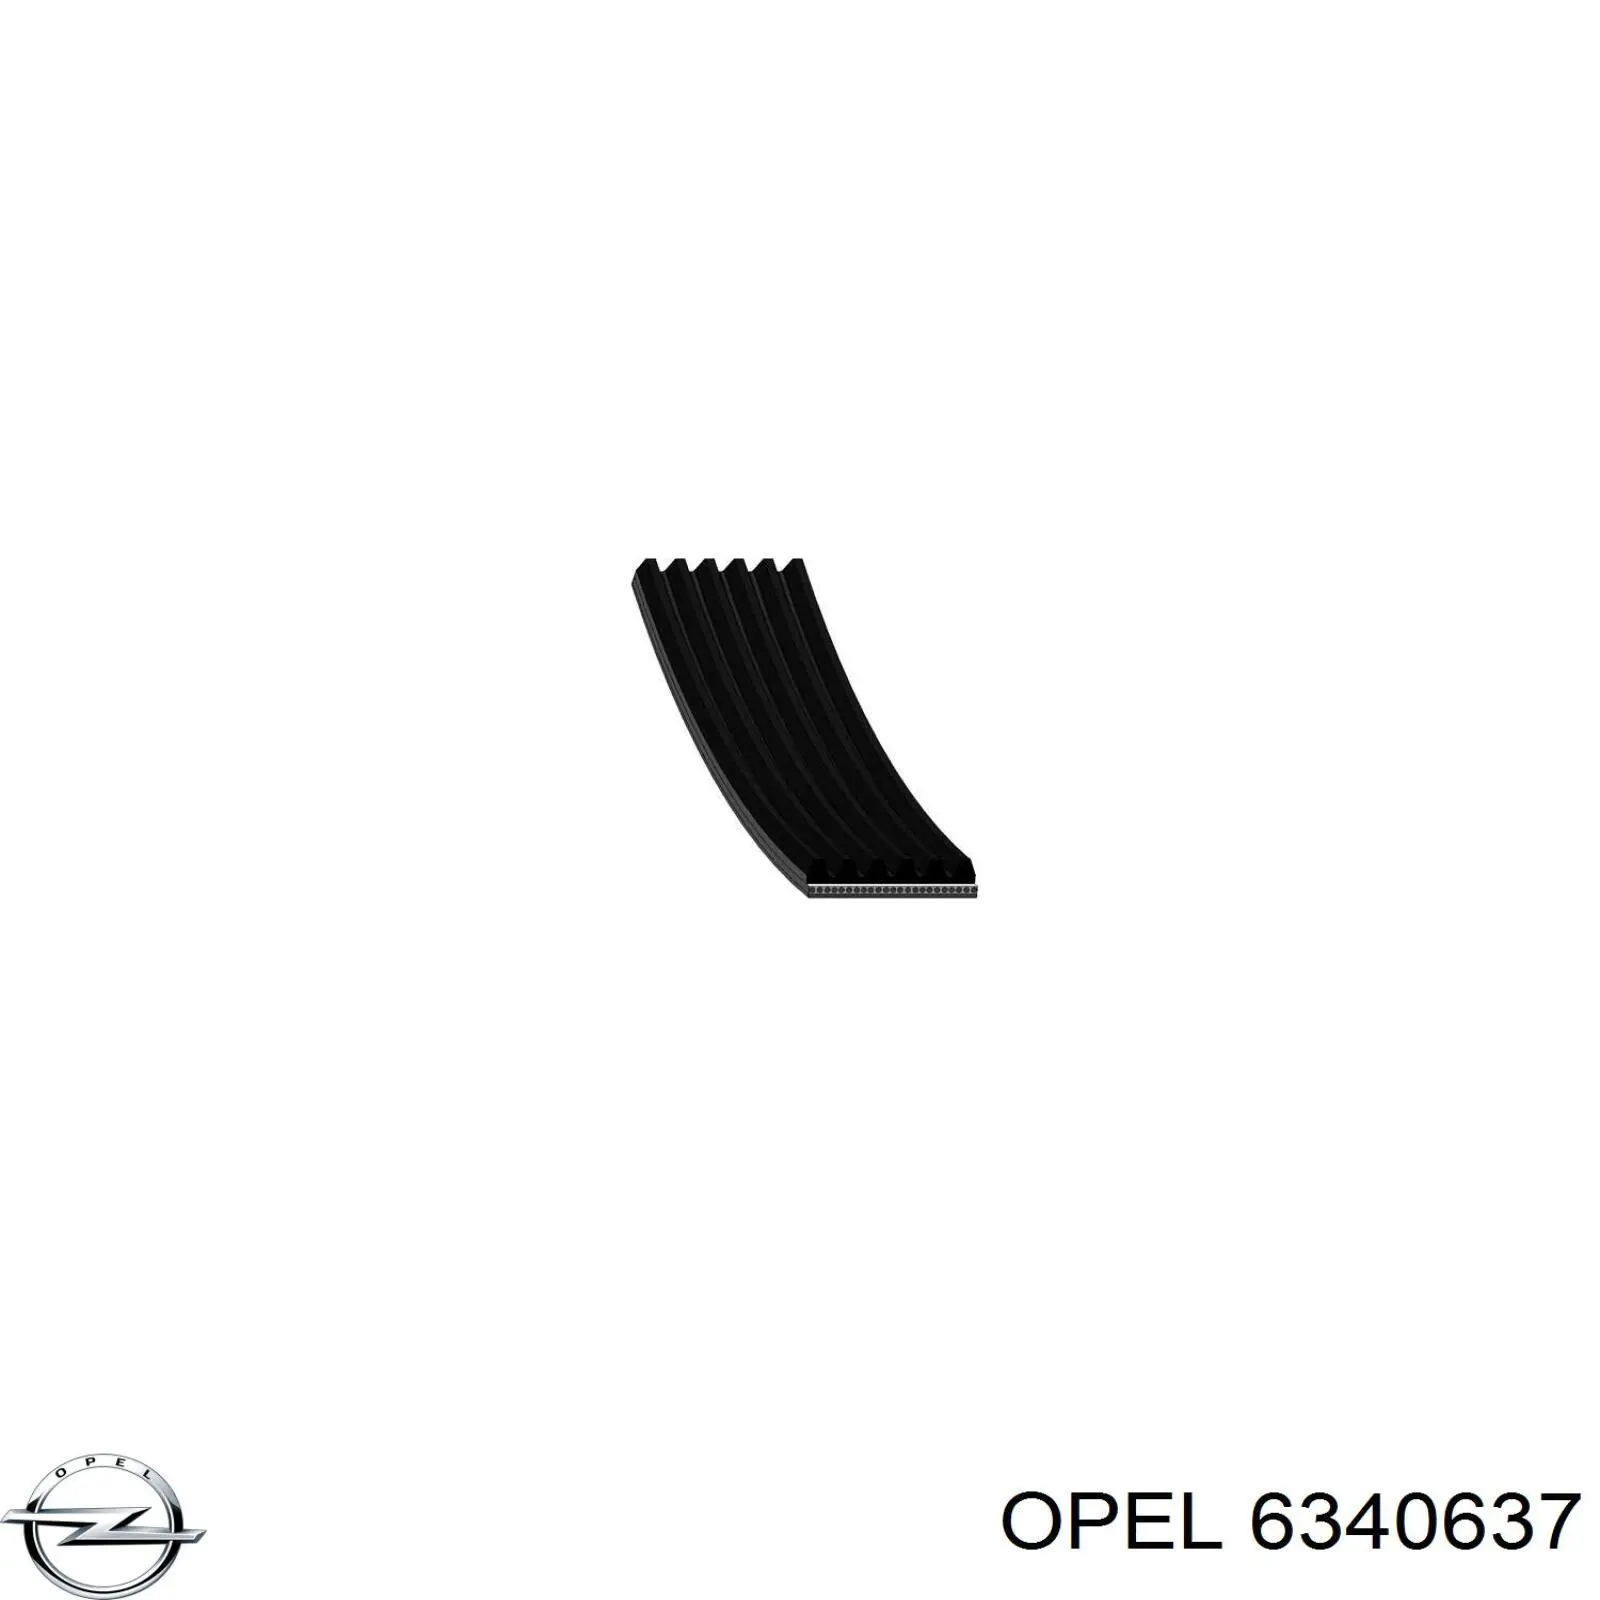 6340637 Opel correa trapezoidal